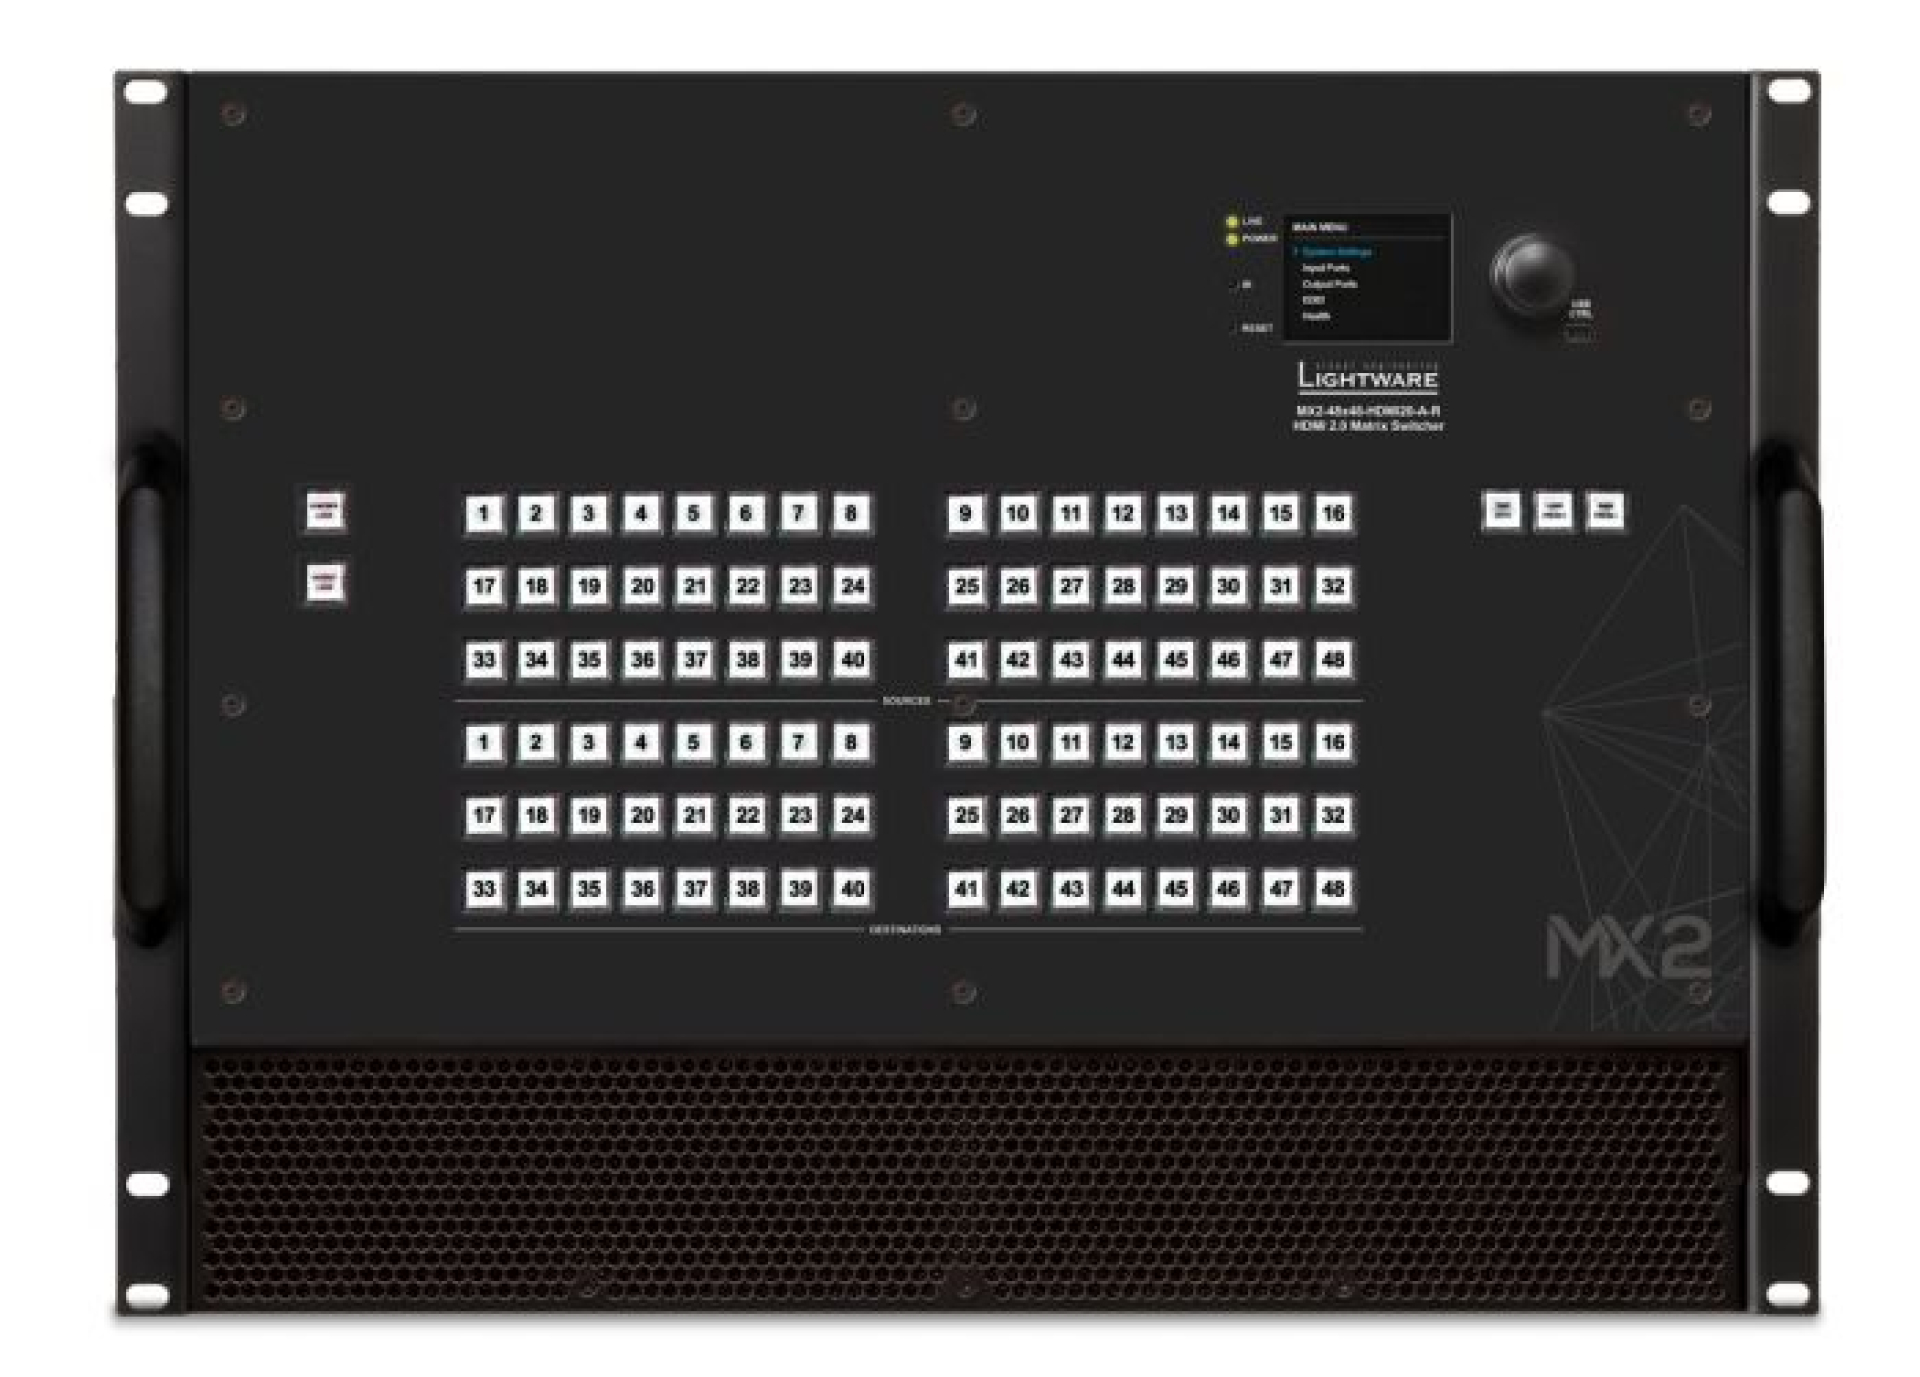 MX2 Matrix Range MX2-48x48-HDMI20-A-R